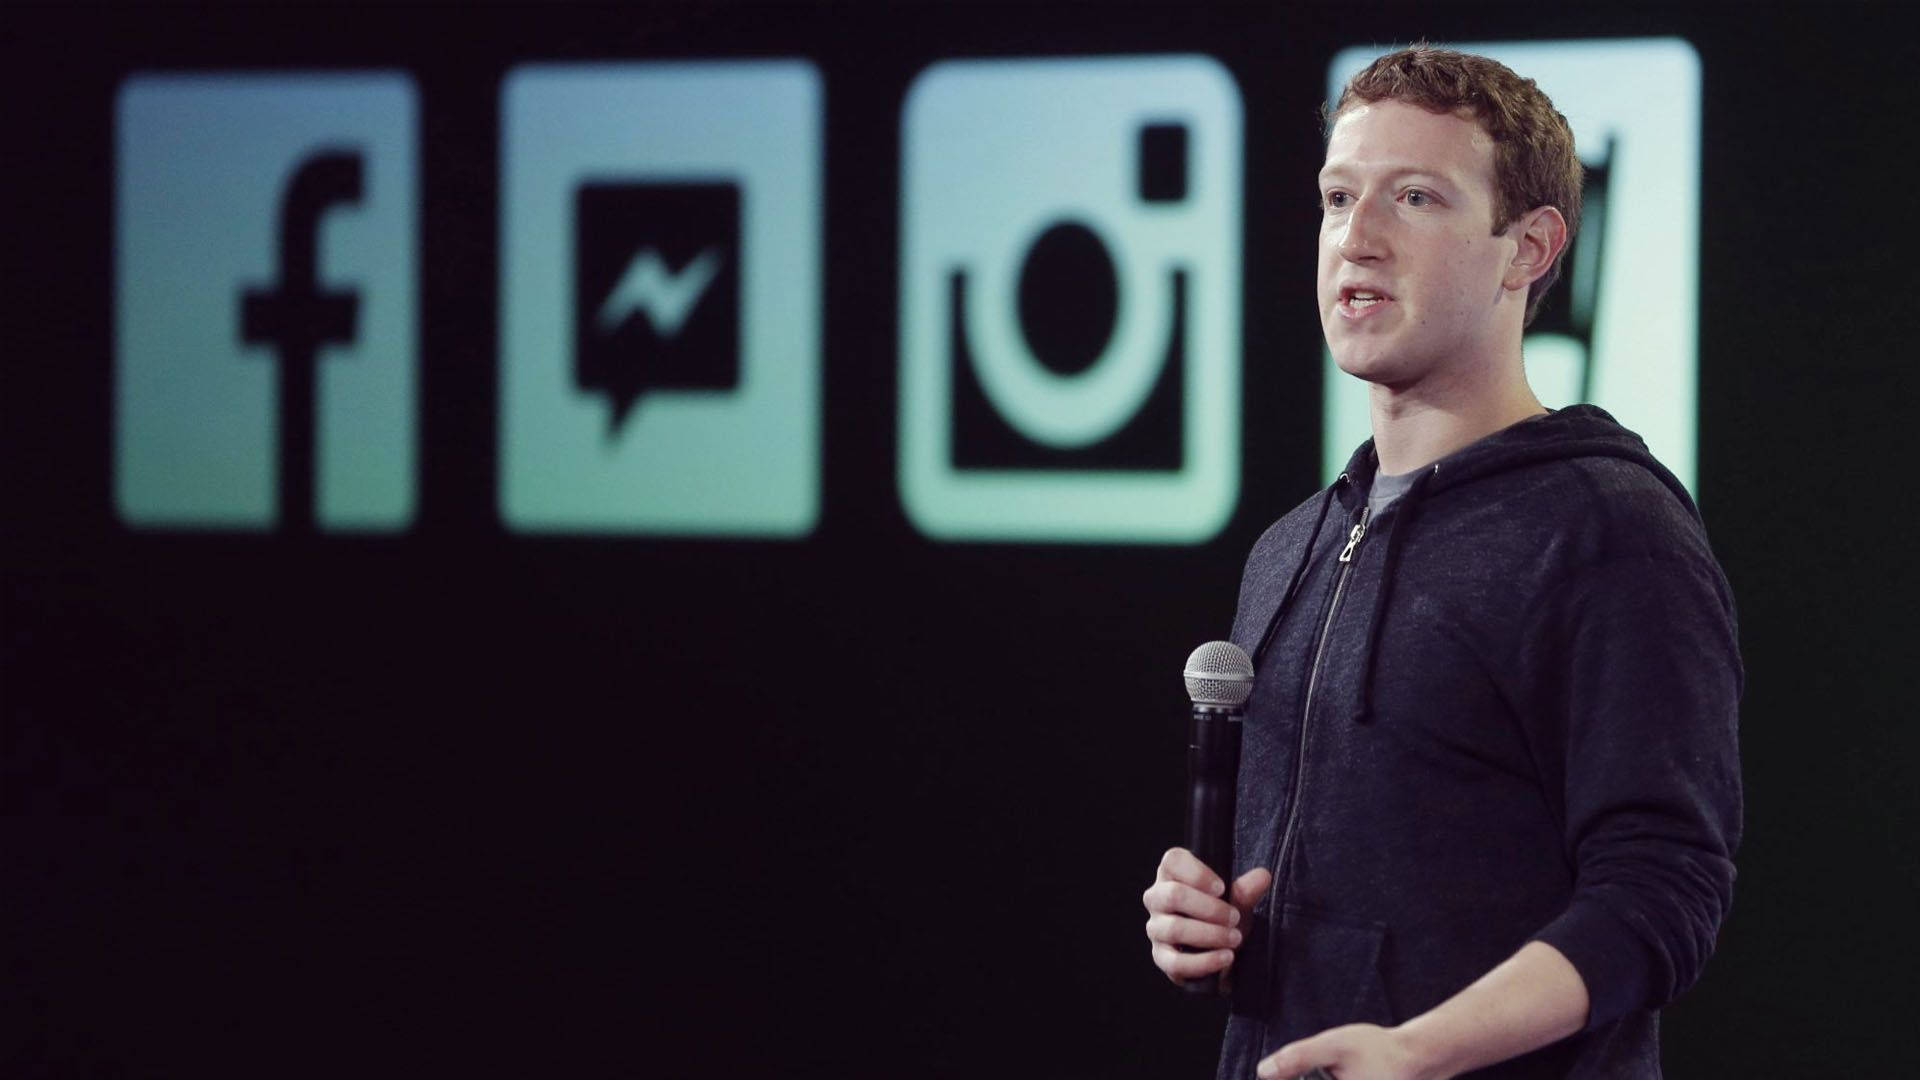 100+] Mark Zuckerberg Wallpapers | Wallpapers.com